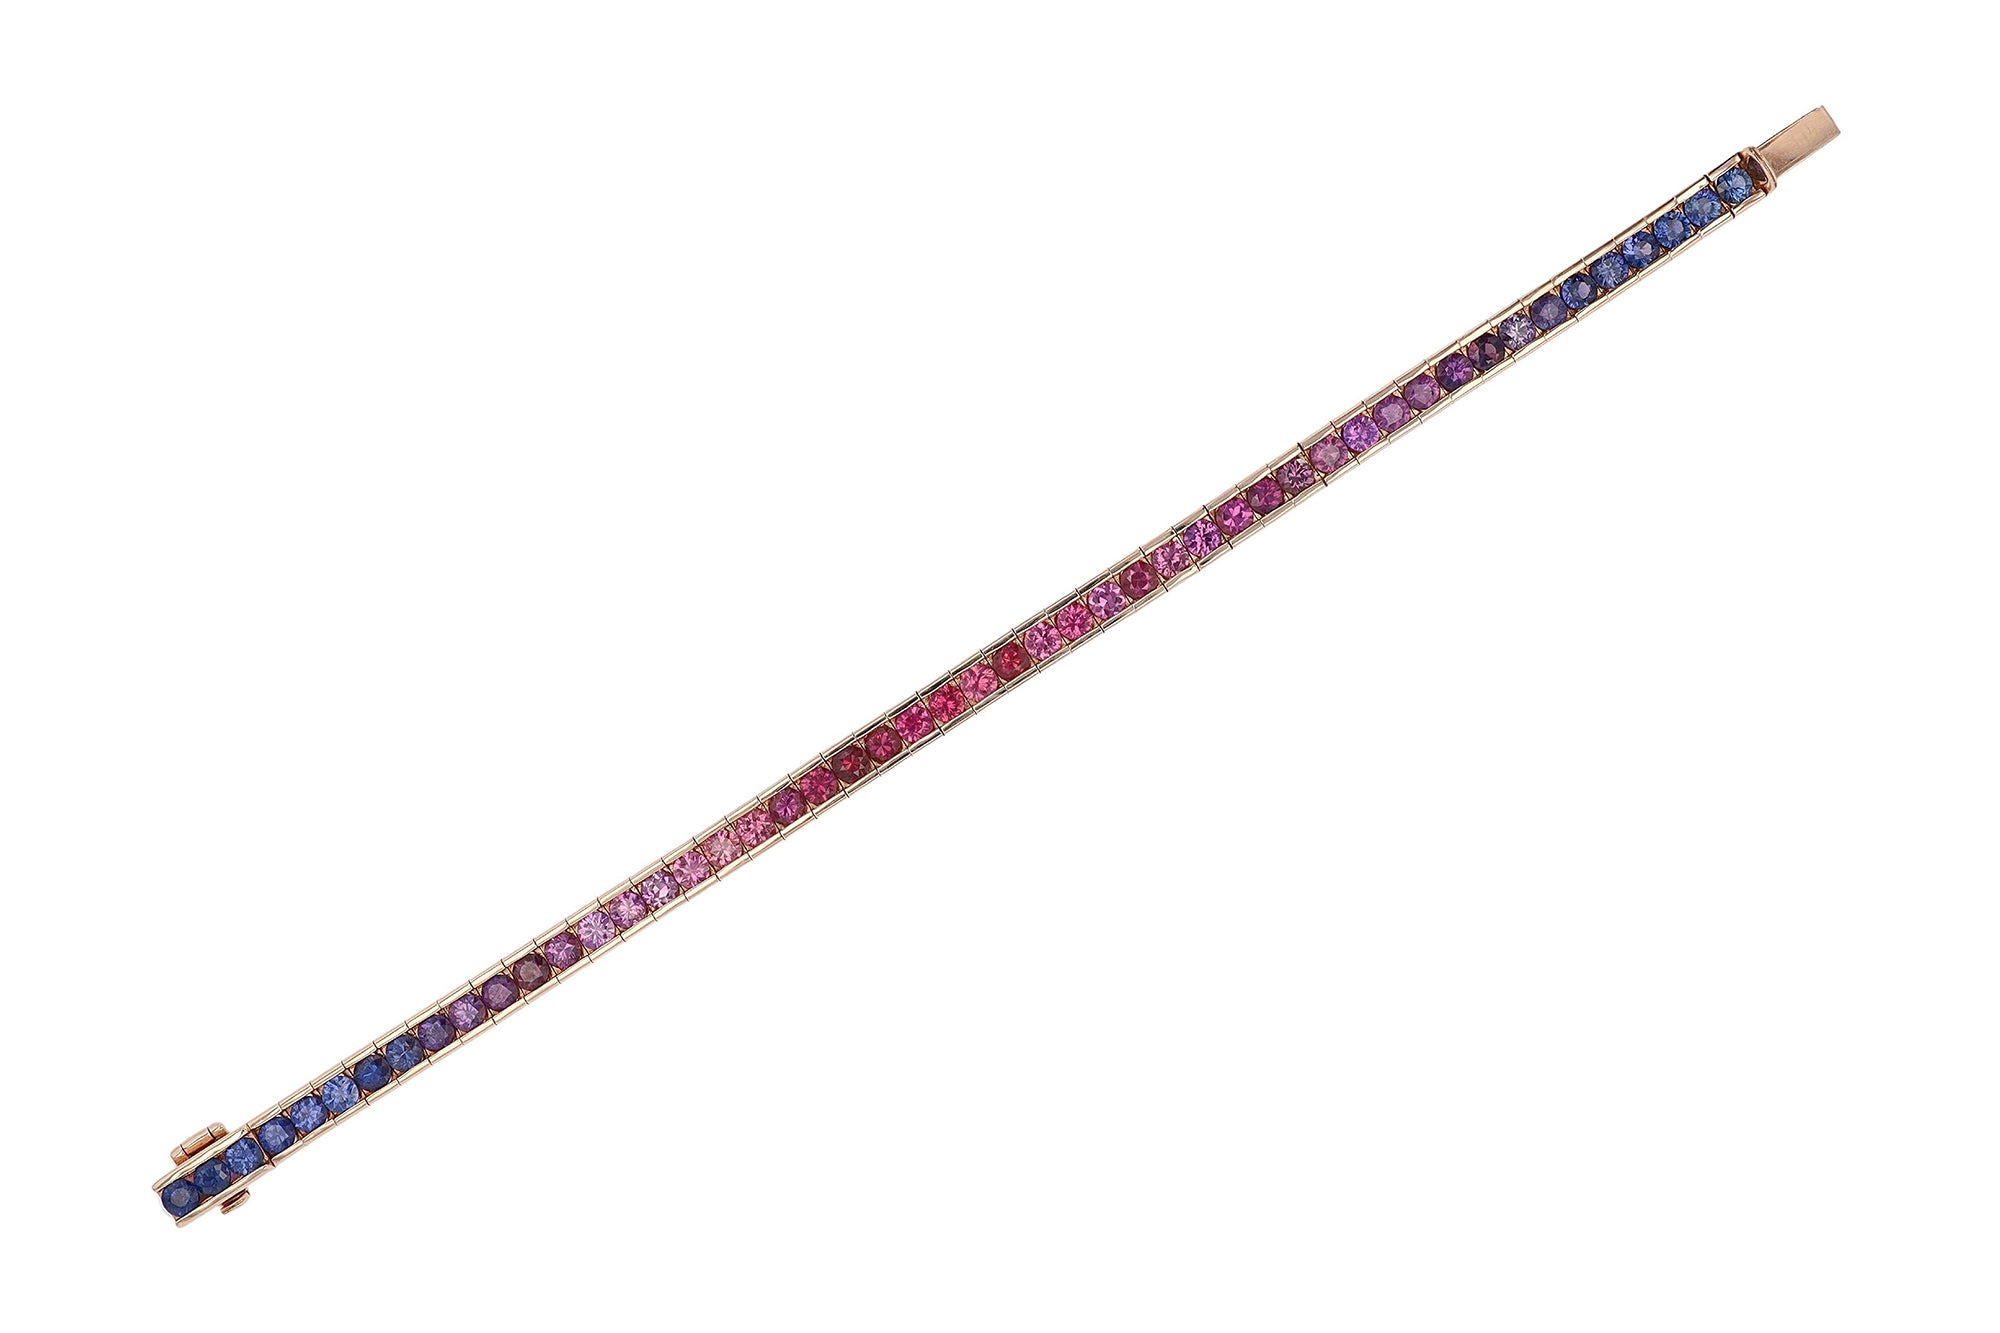 Rainbow Sapphire Tennis Bracelet